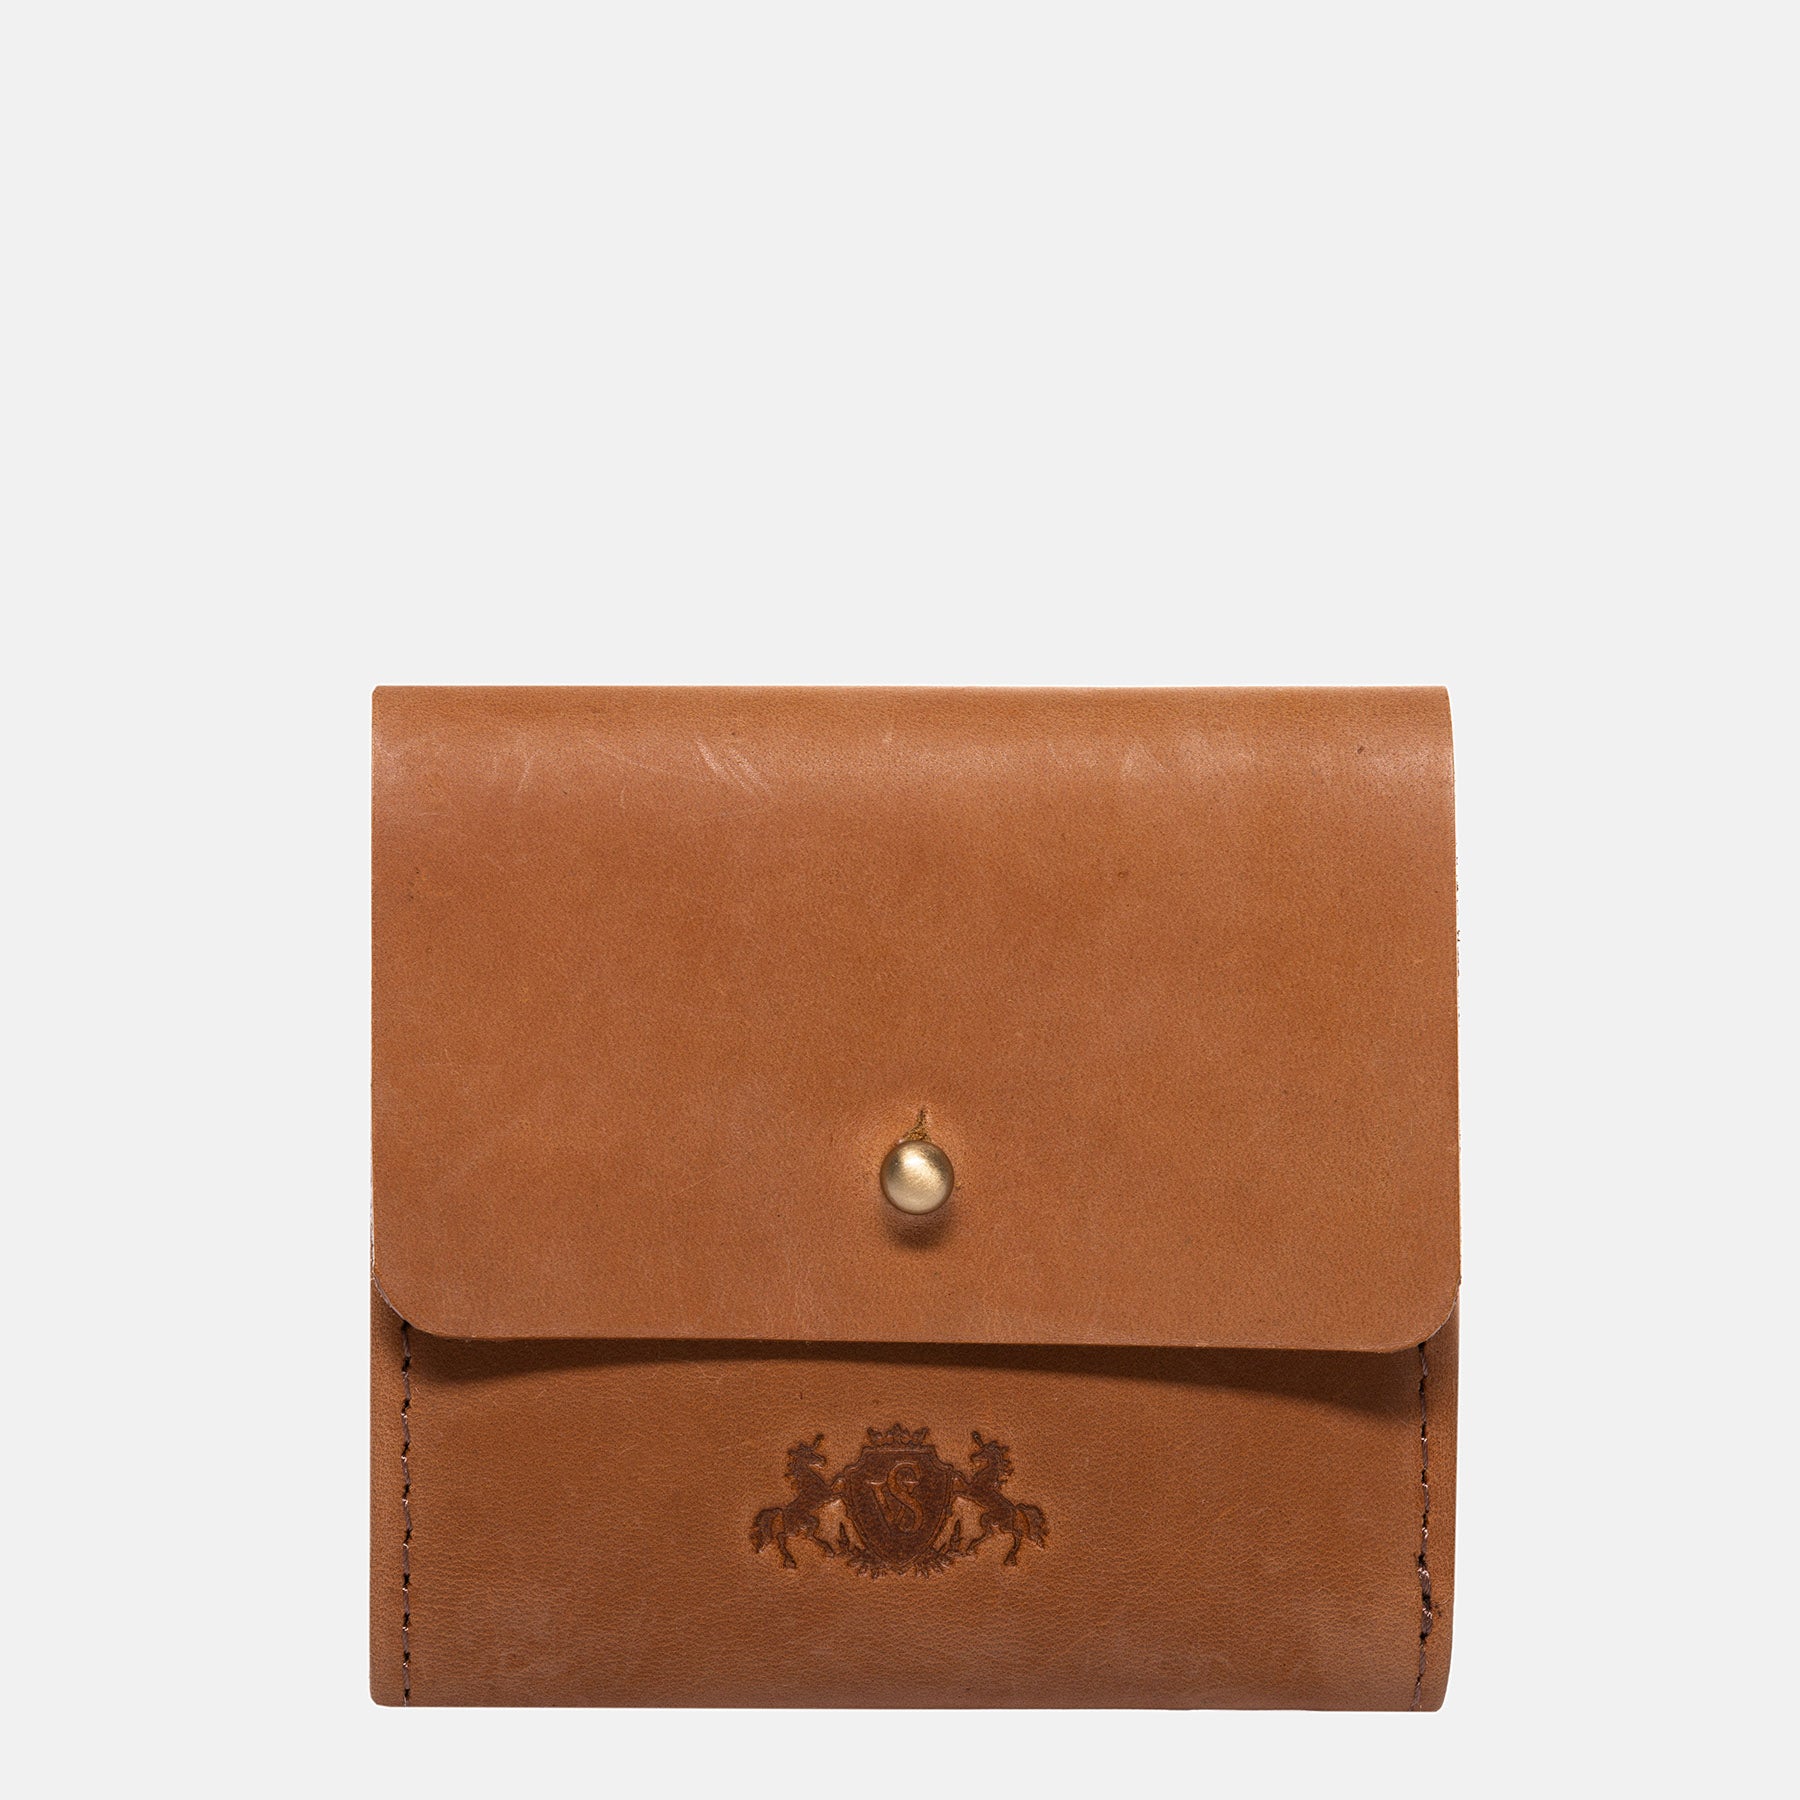 Wallet ELSA smooth leather brown